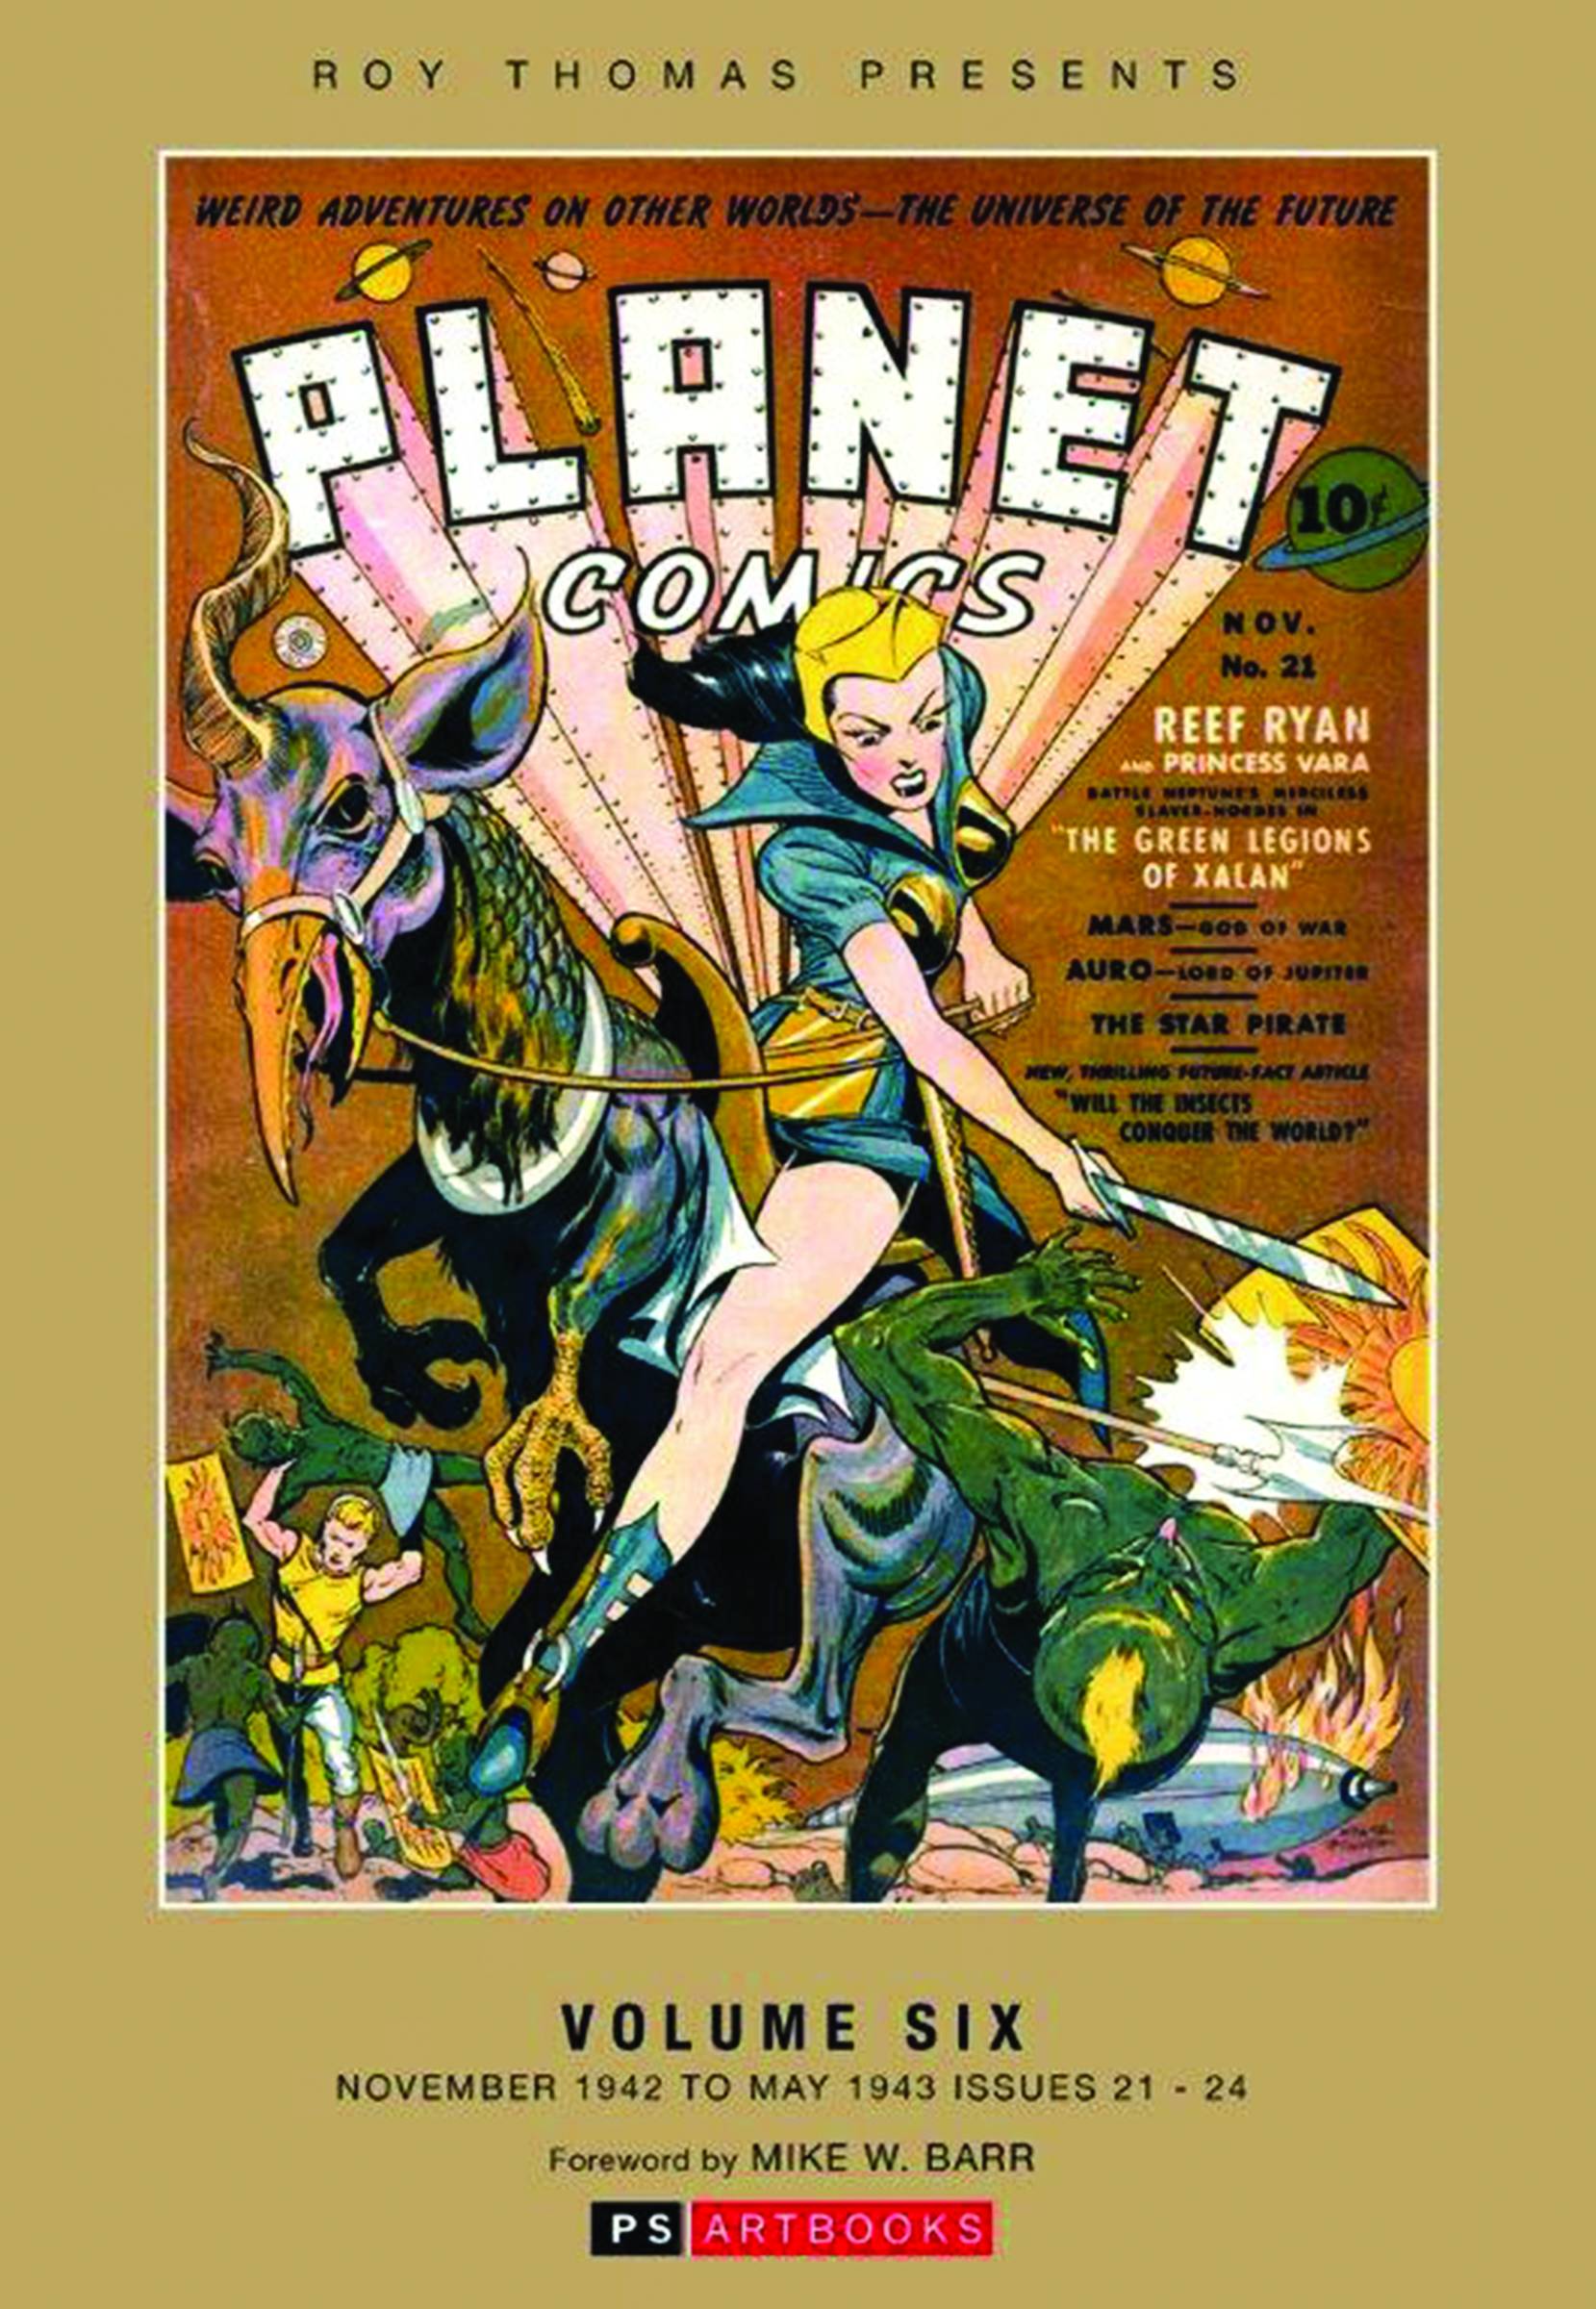 Roy Thomas Presents Planet Comics Hardcover Volume 6 Nov 42 - May 43